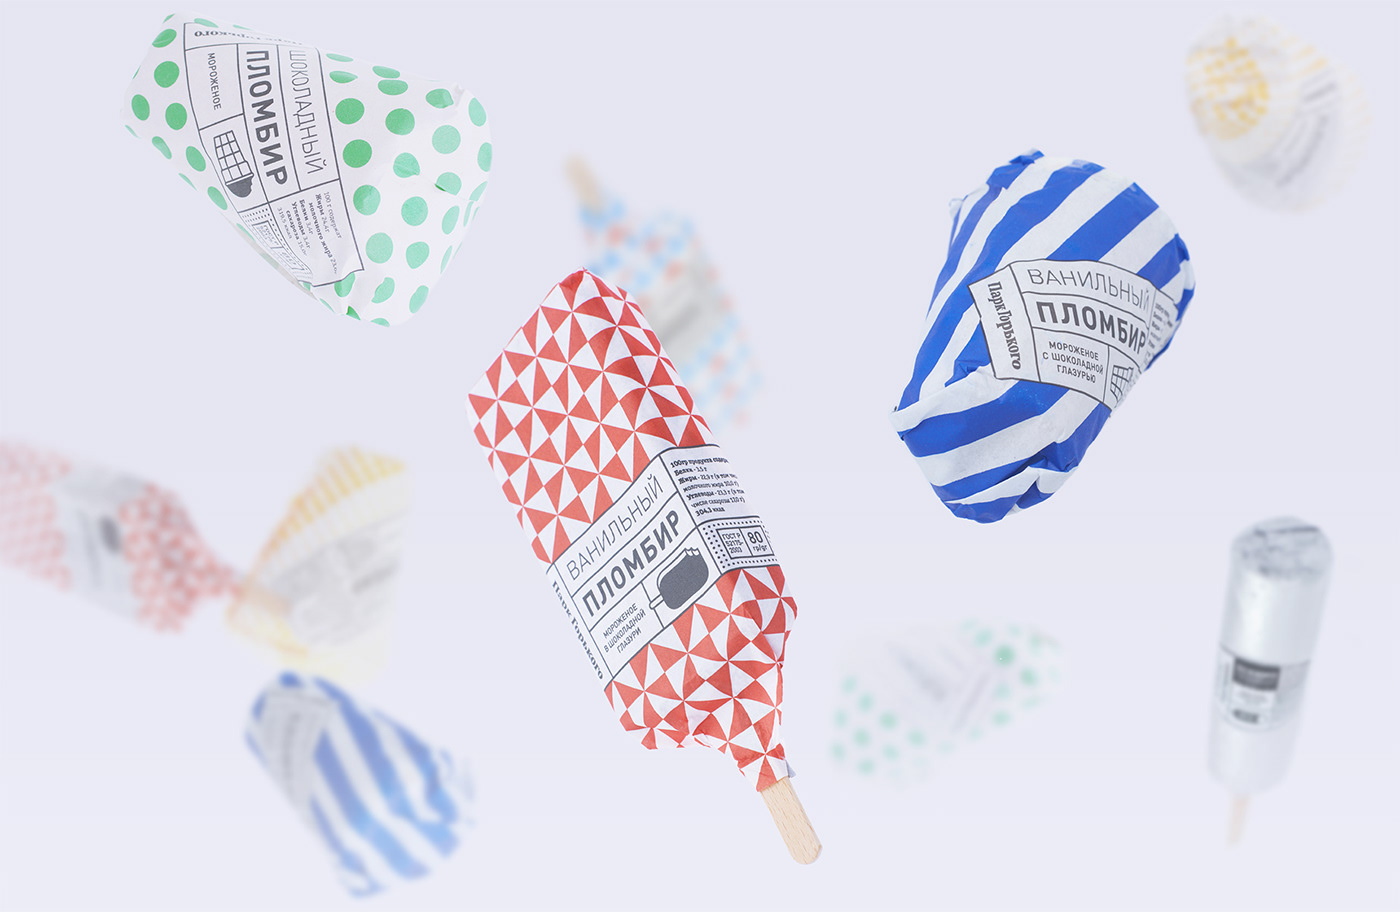 мороженое парка горького Мороженое паттерн упаковка мороженого  Gorky Park icecream pattern Flavours ice cream gorky park